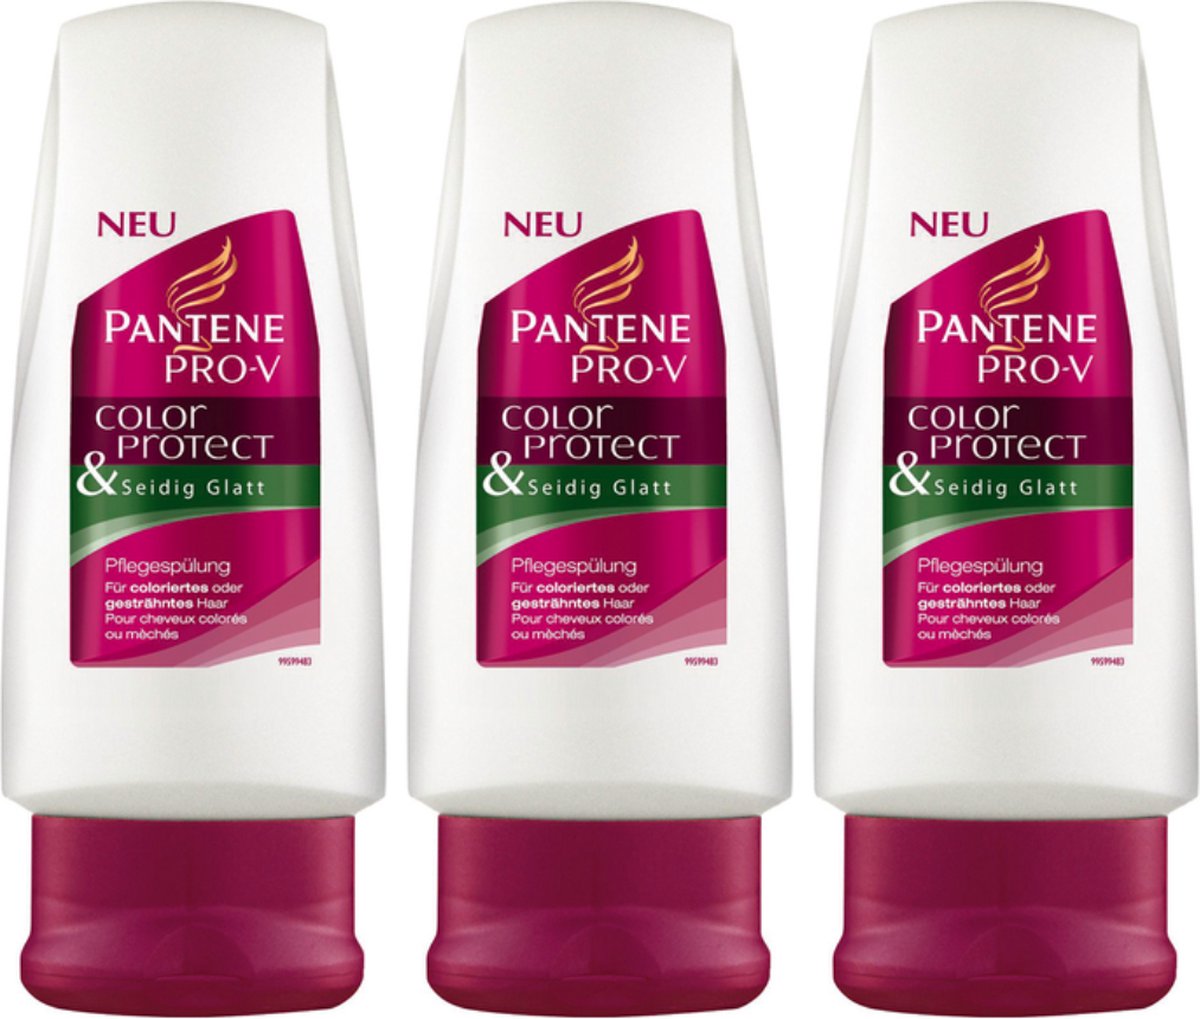 Pantene Pro-V Color Protect & Lisse/Glad Shampoo Multi Pack - 3 x 250 ml